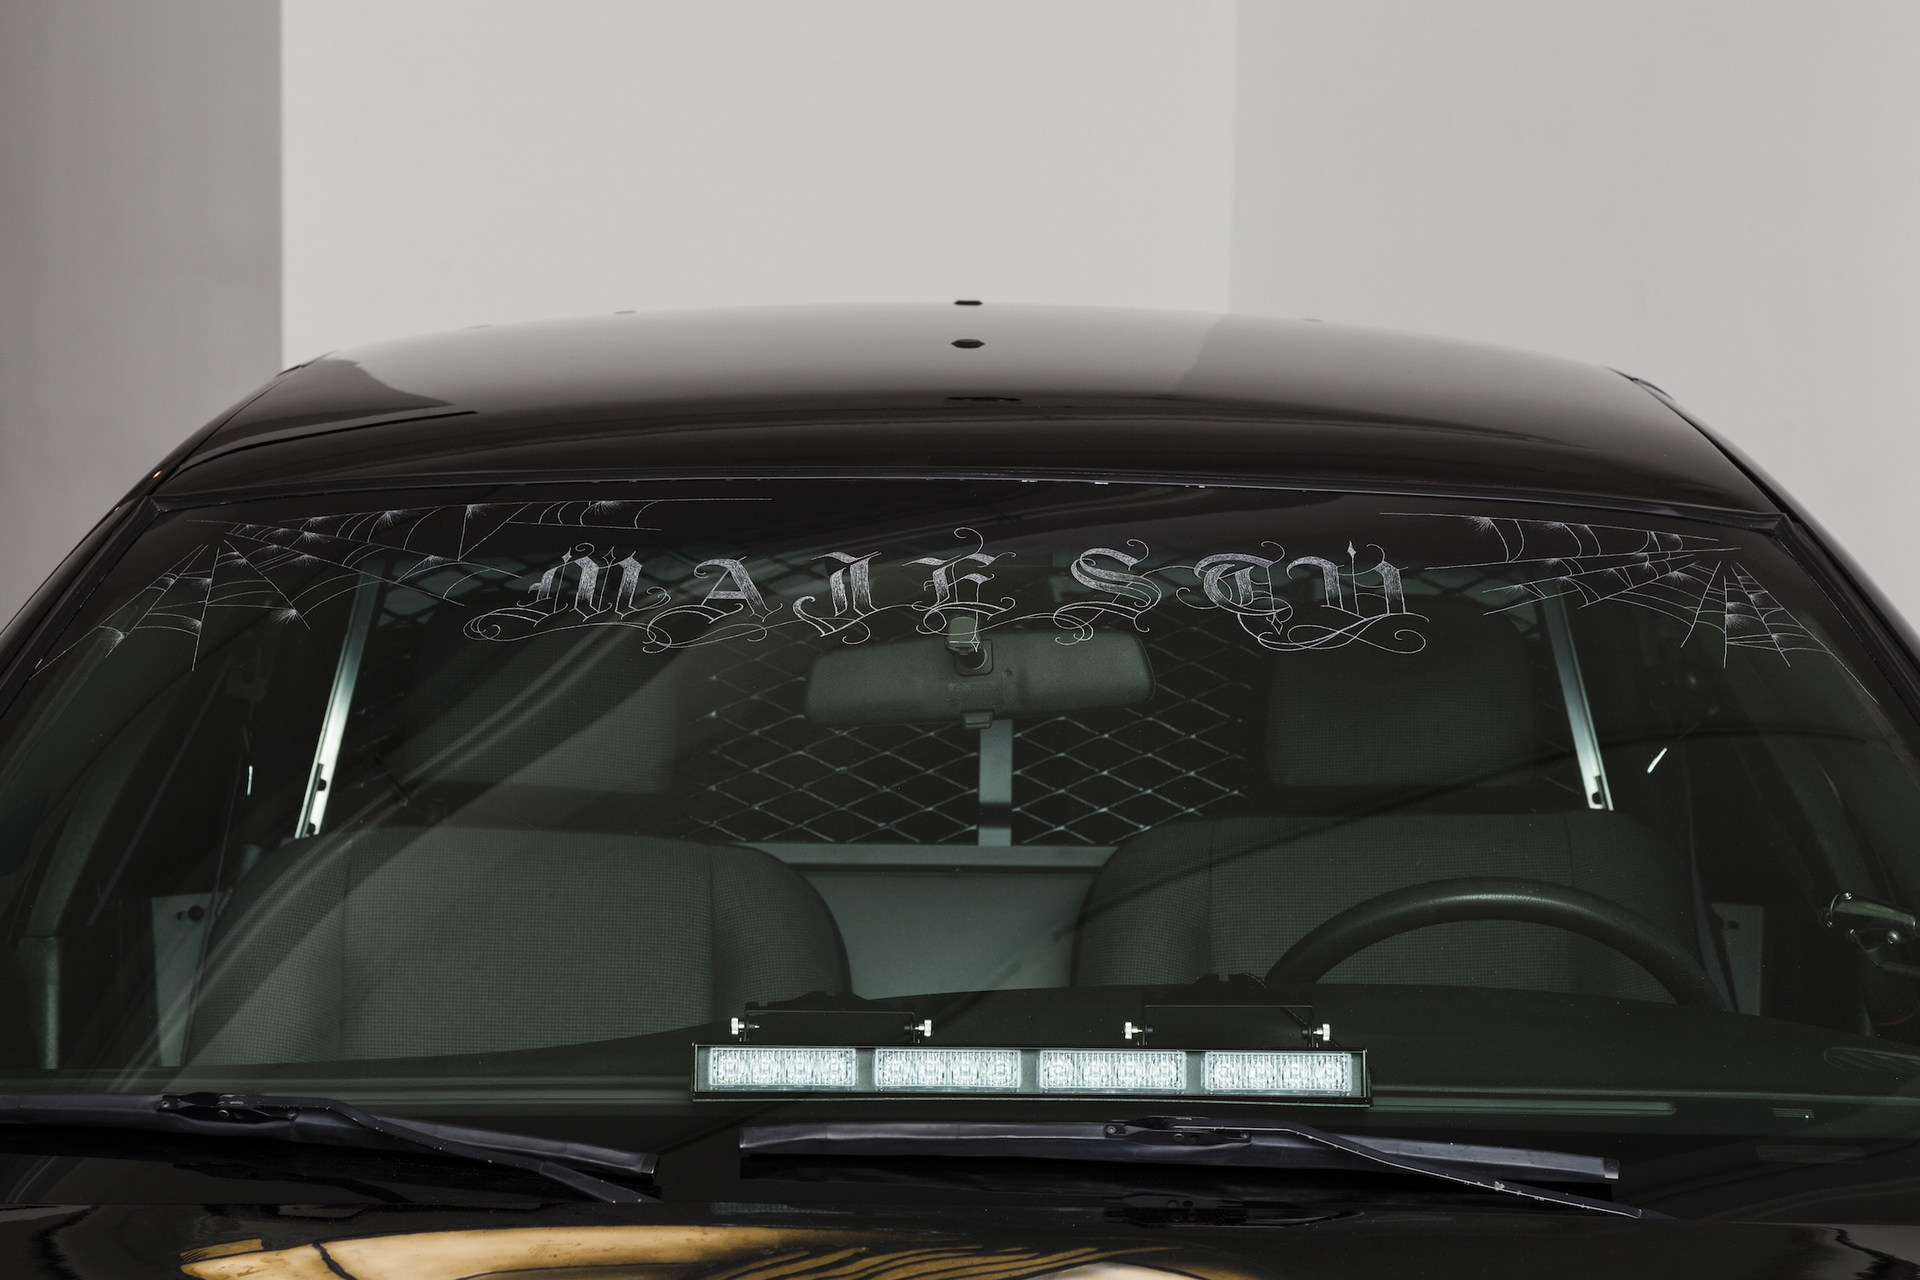 SCa_15_001 detail windshield FULL